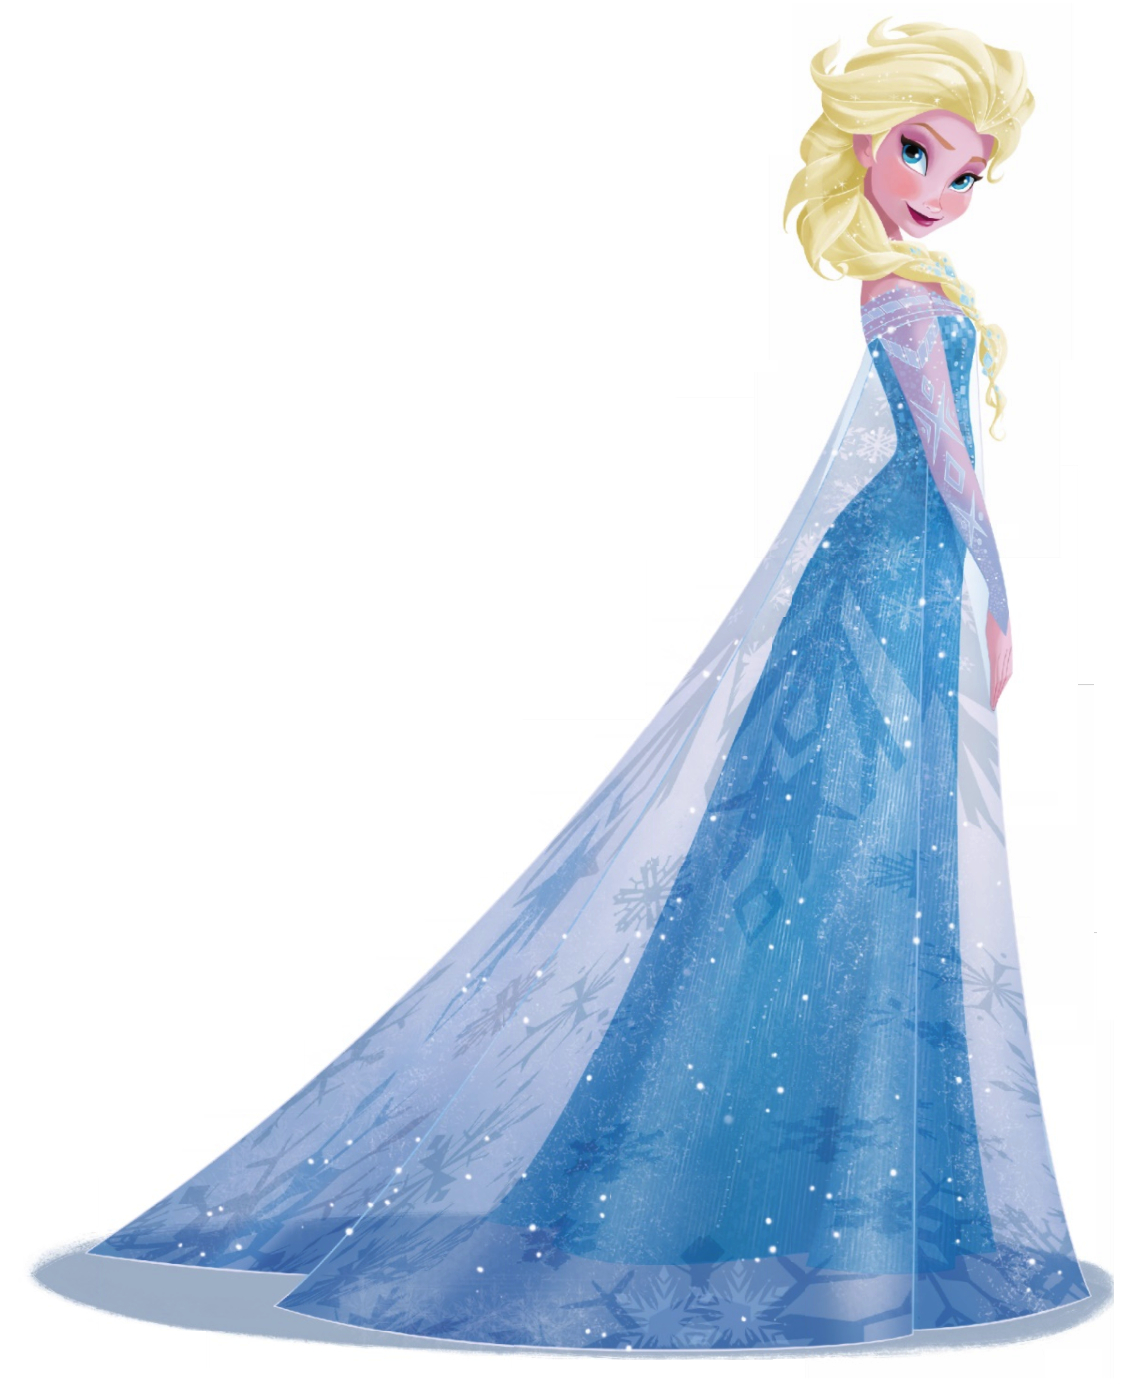 Elsa 2d   Disney Princess Photo  35586157    Fanpop